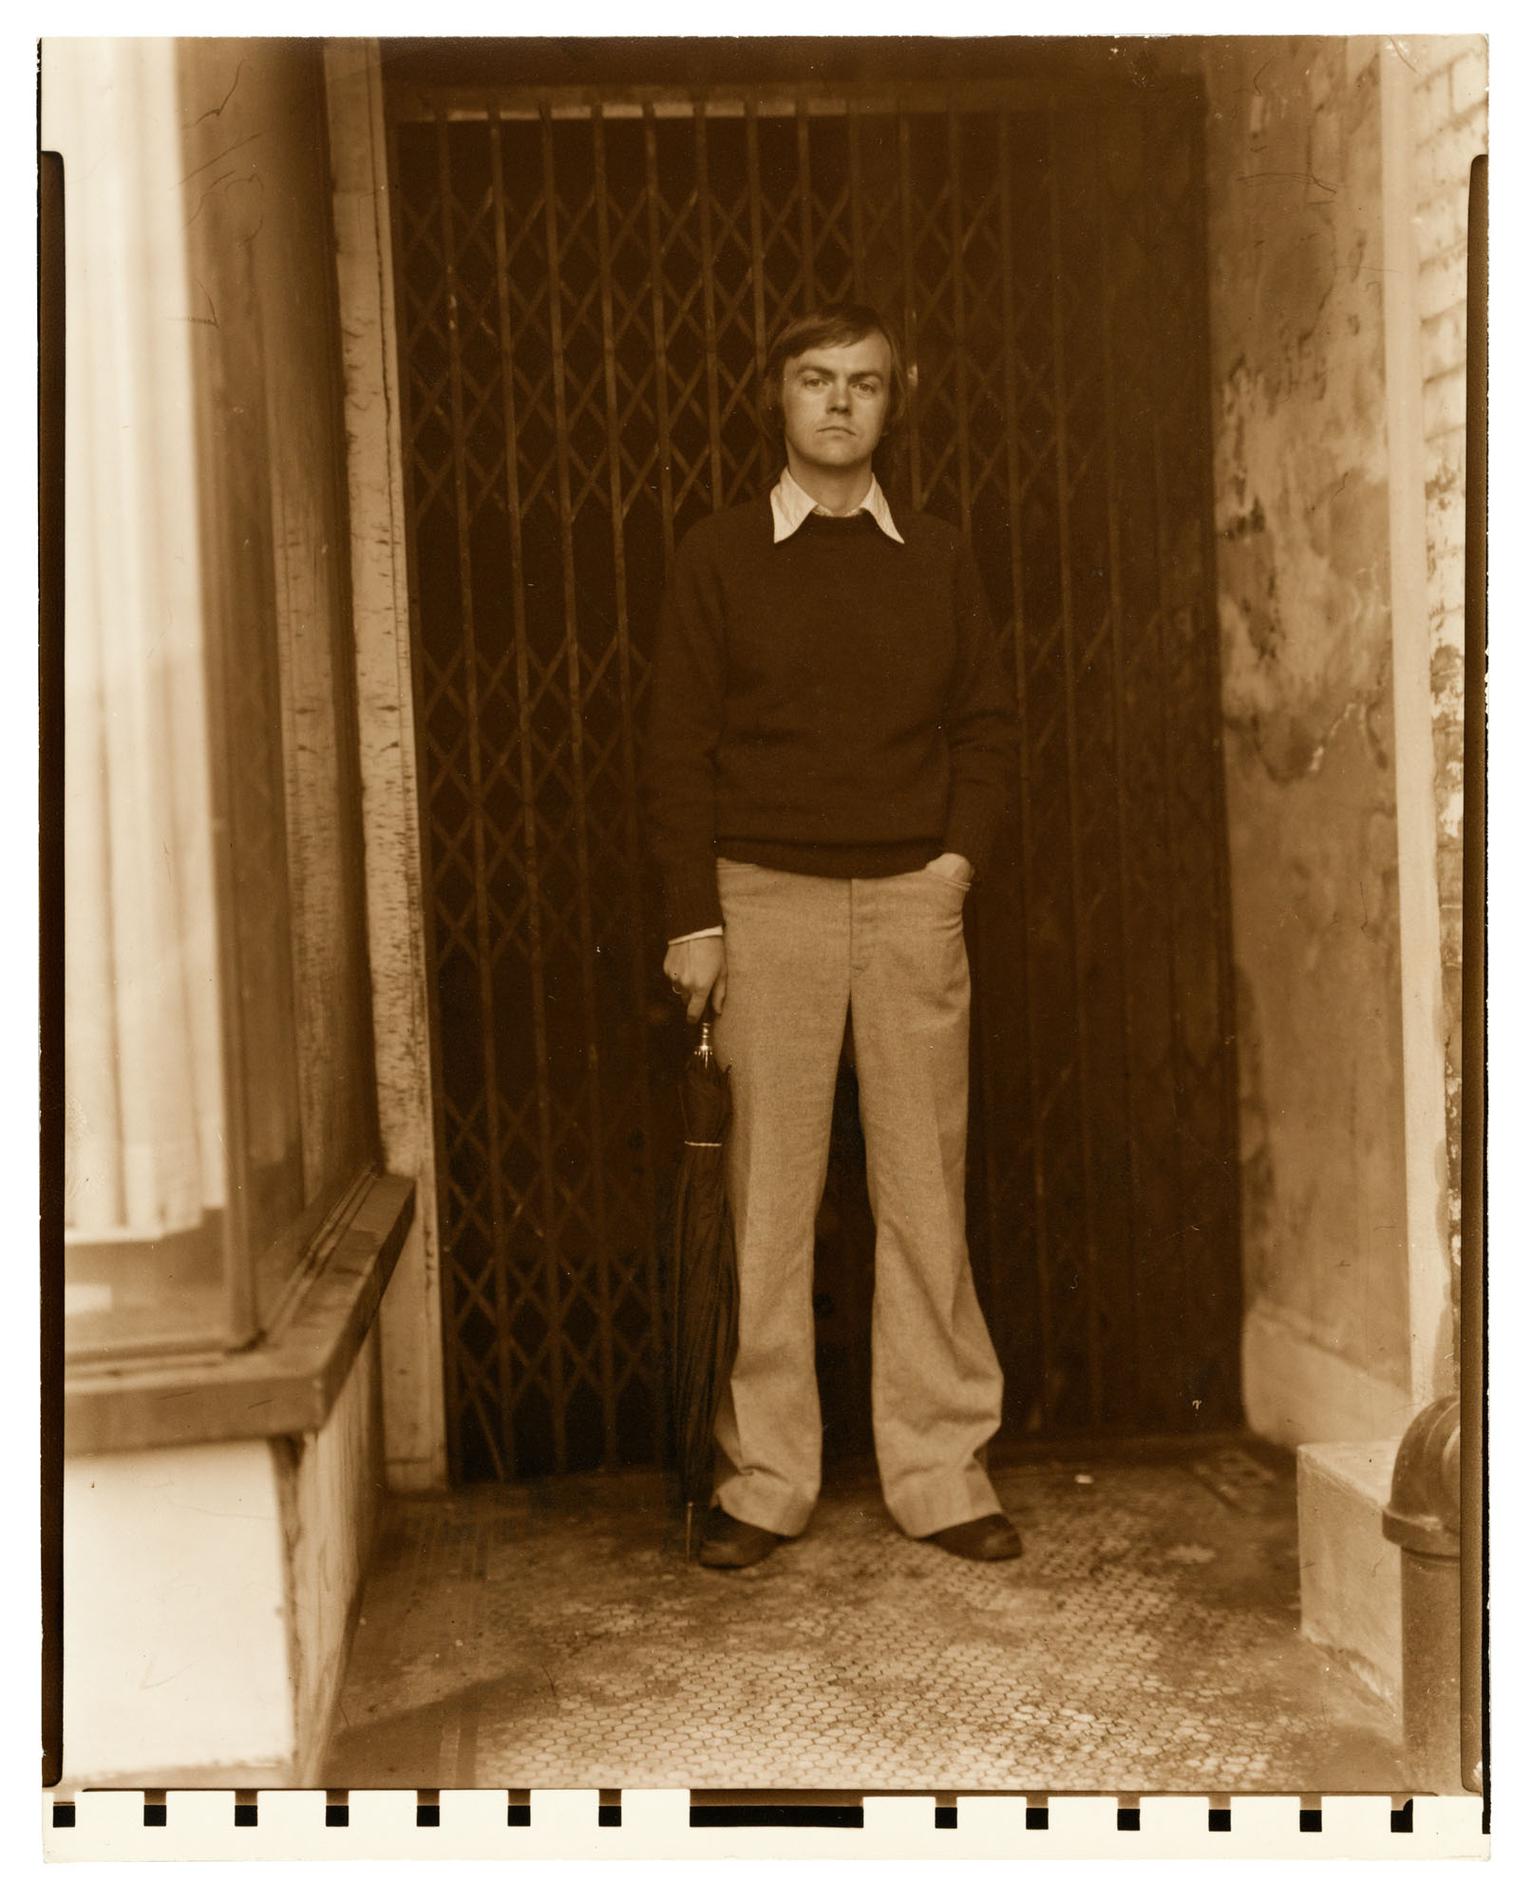 Portrait of a man in a doorway